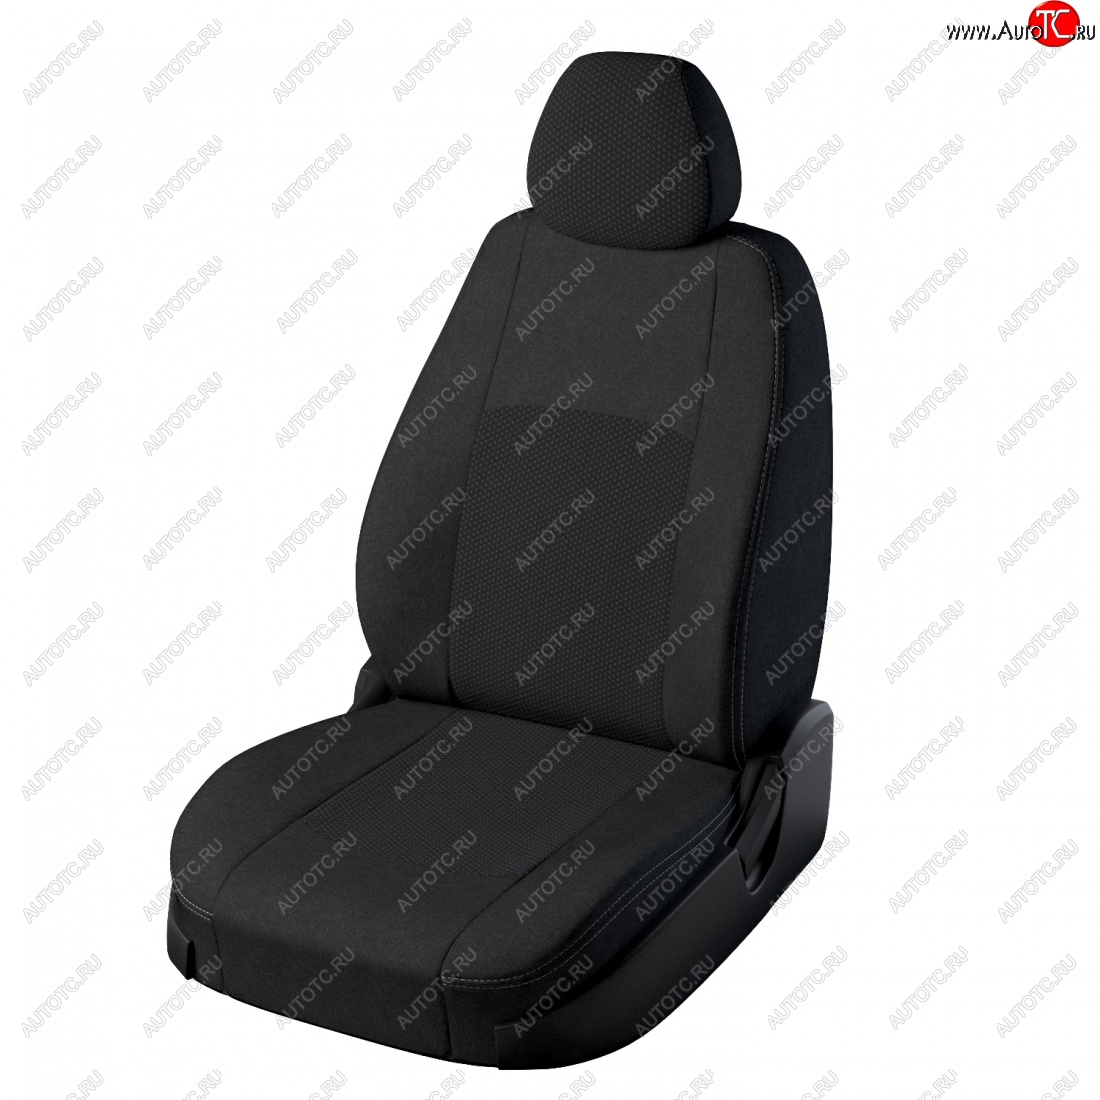 4 799 р. Чехлы для сидений Lord Autofashion Турин (жаккард)  Hyundai Accent  седан ТагАЗ (2001-2012) (Чёрный, вставка Эльбрус)